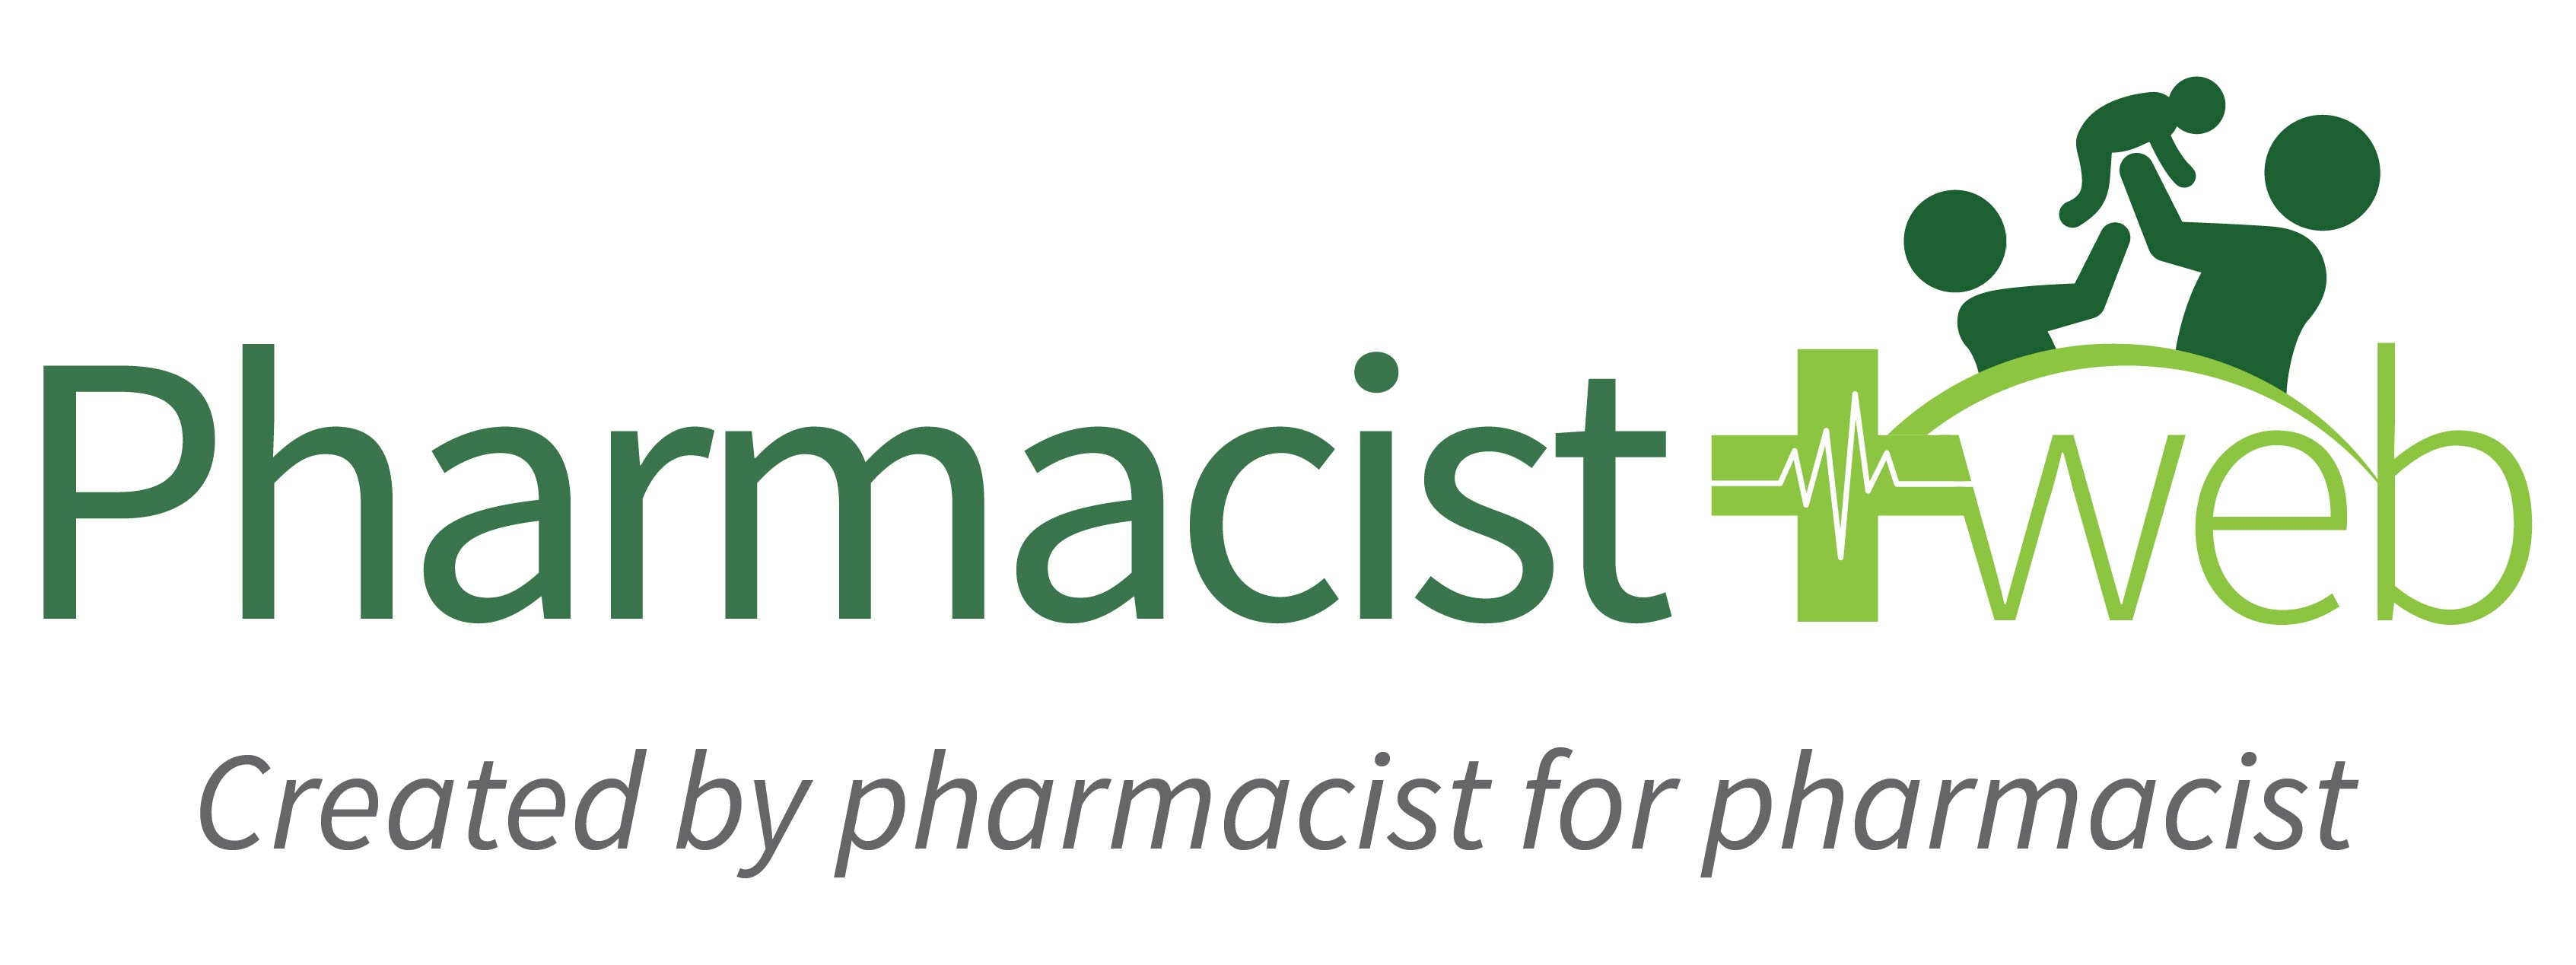 Pharmacist Web